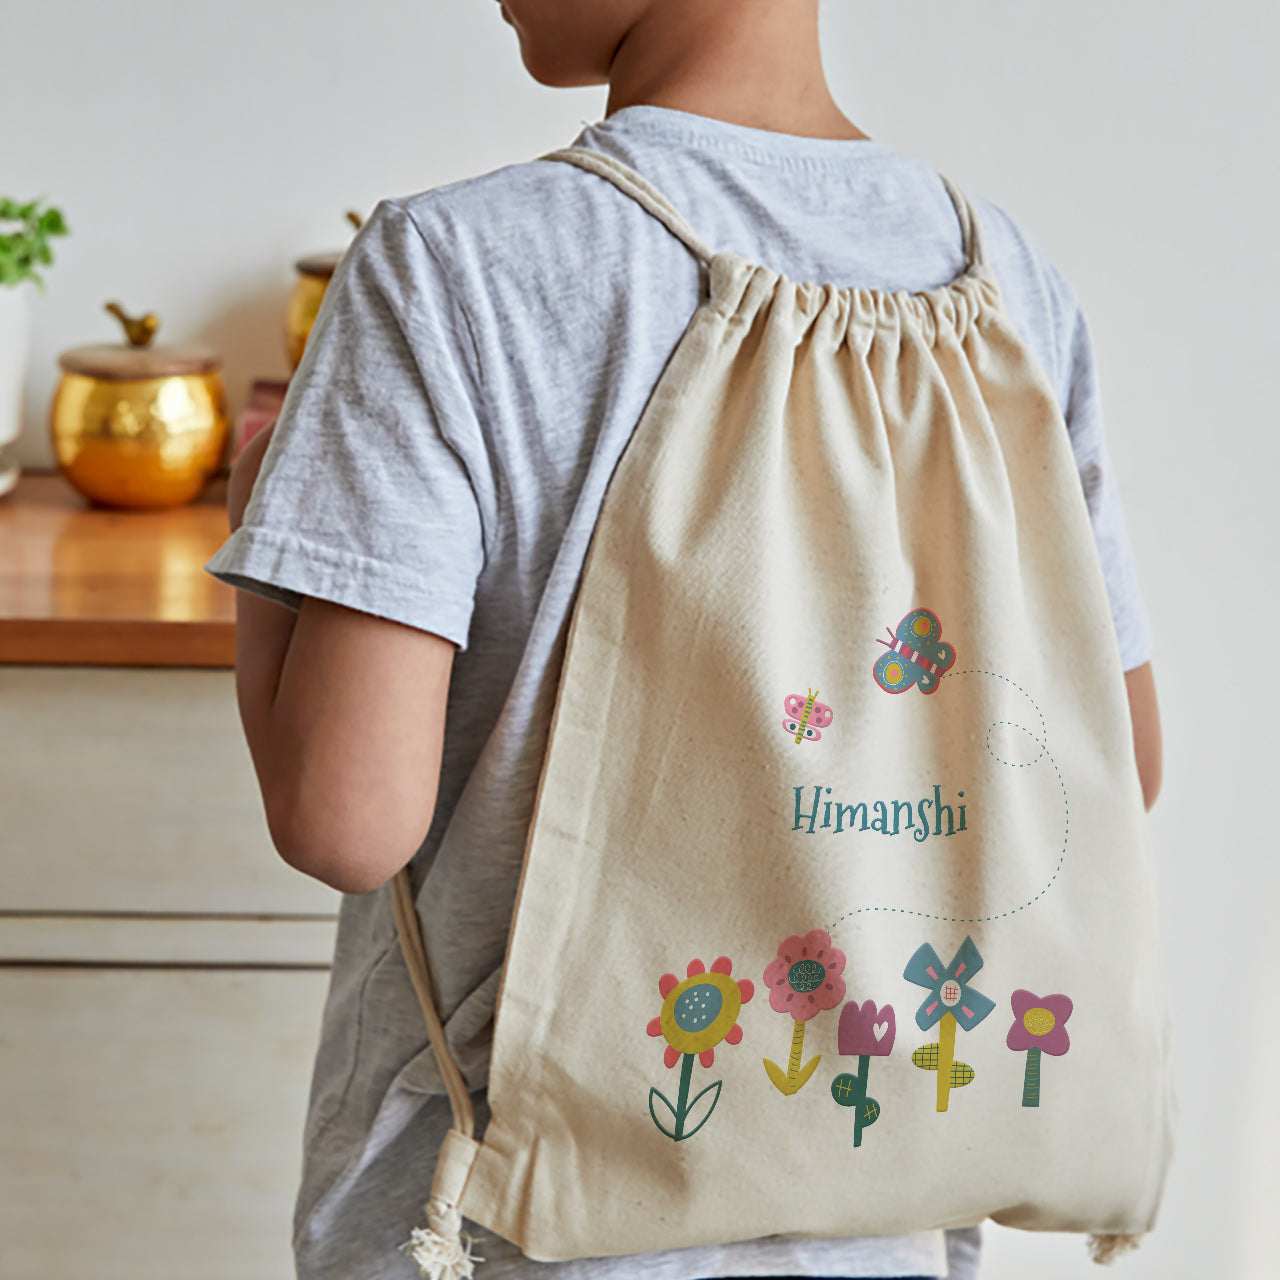 Personalised Drawstring Bag - Flower Power